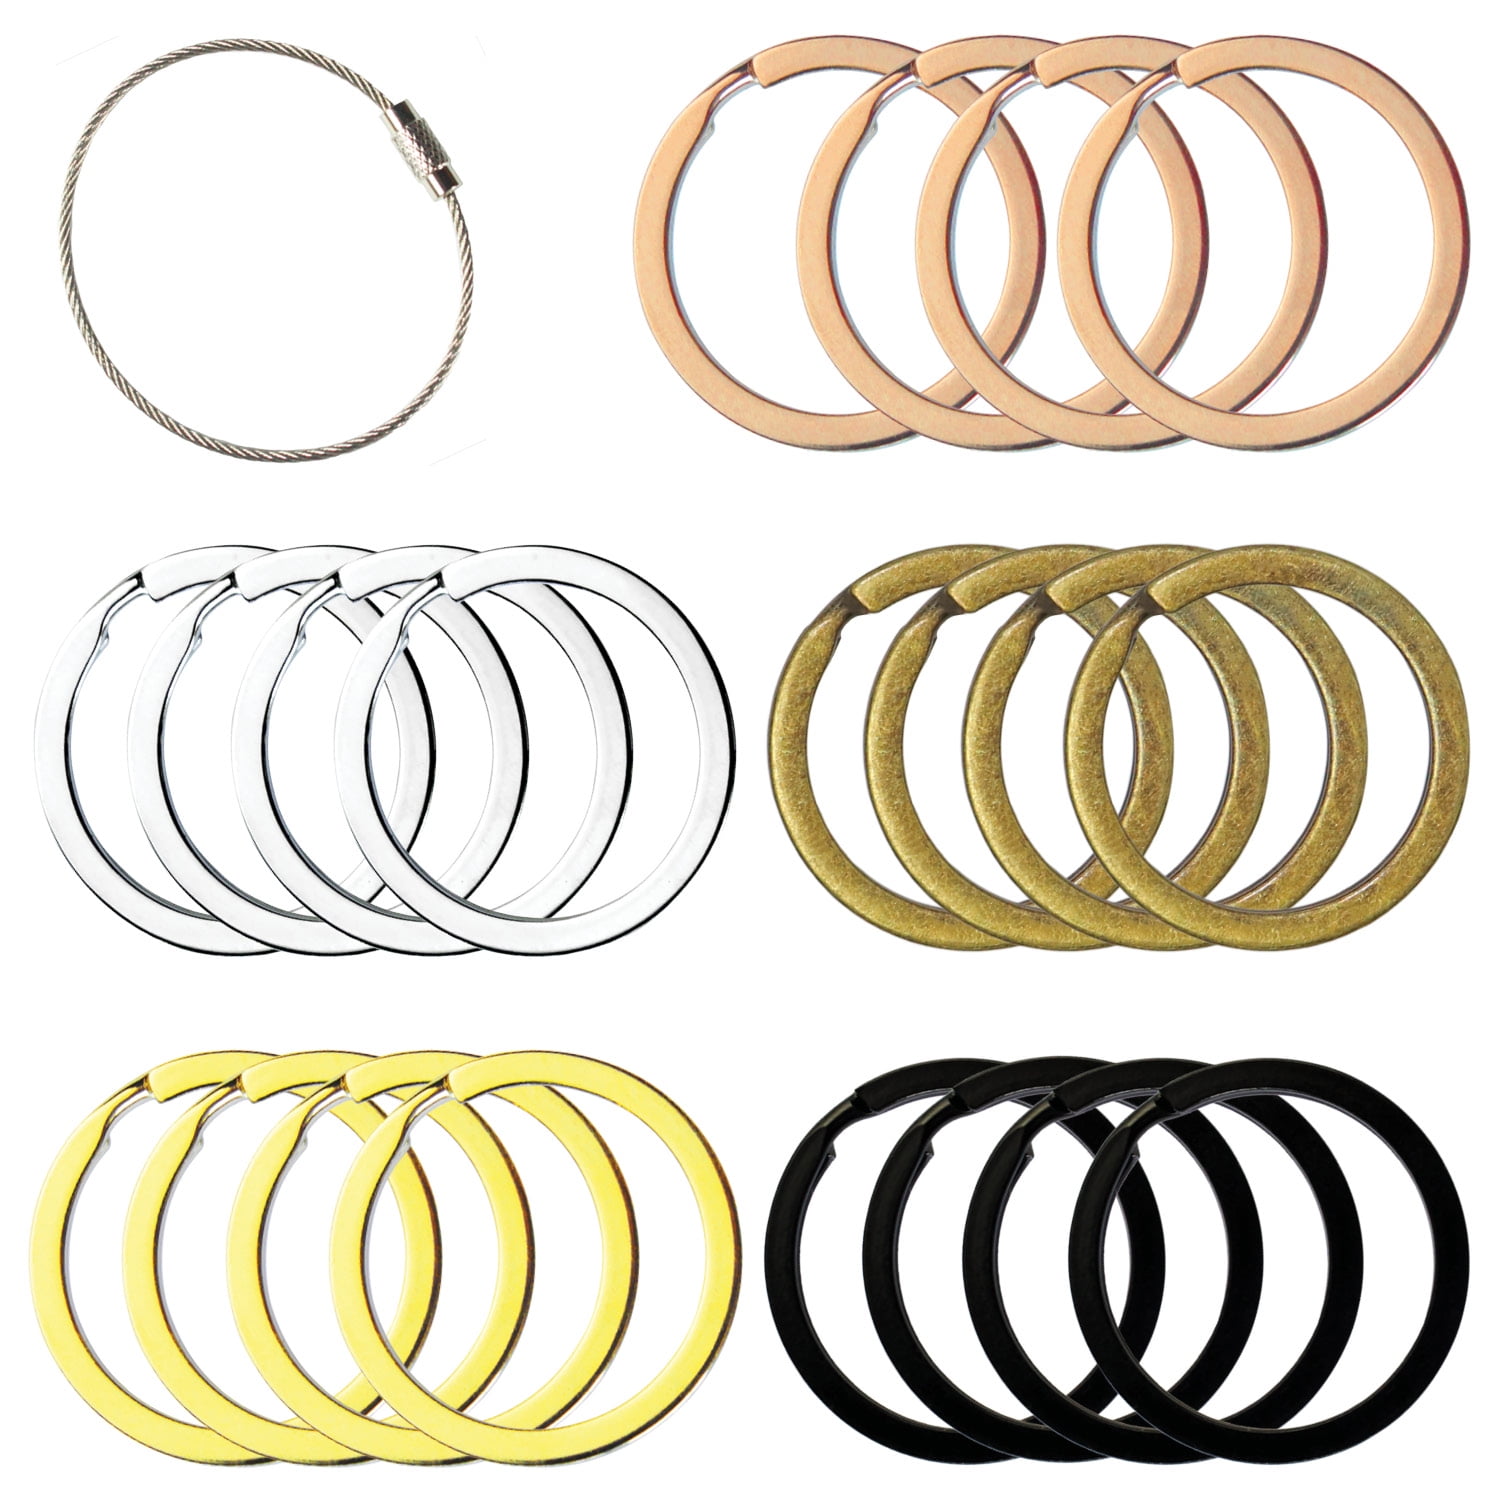 Flat Key Rings Key Chain Metal Split Ring 40pcs (Round 1.25 Inch Diameter),  for Home Car Keys Organization, Arts & Crafts, Lanyards, Lead Free Colored  